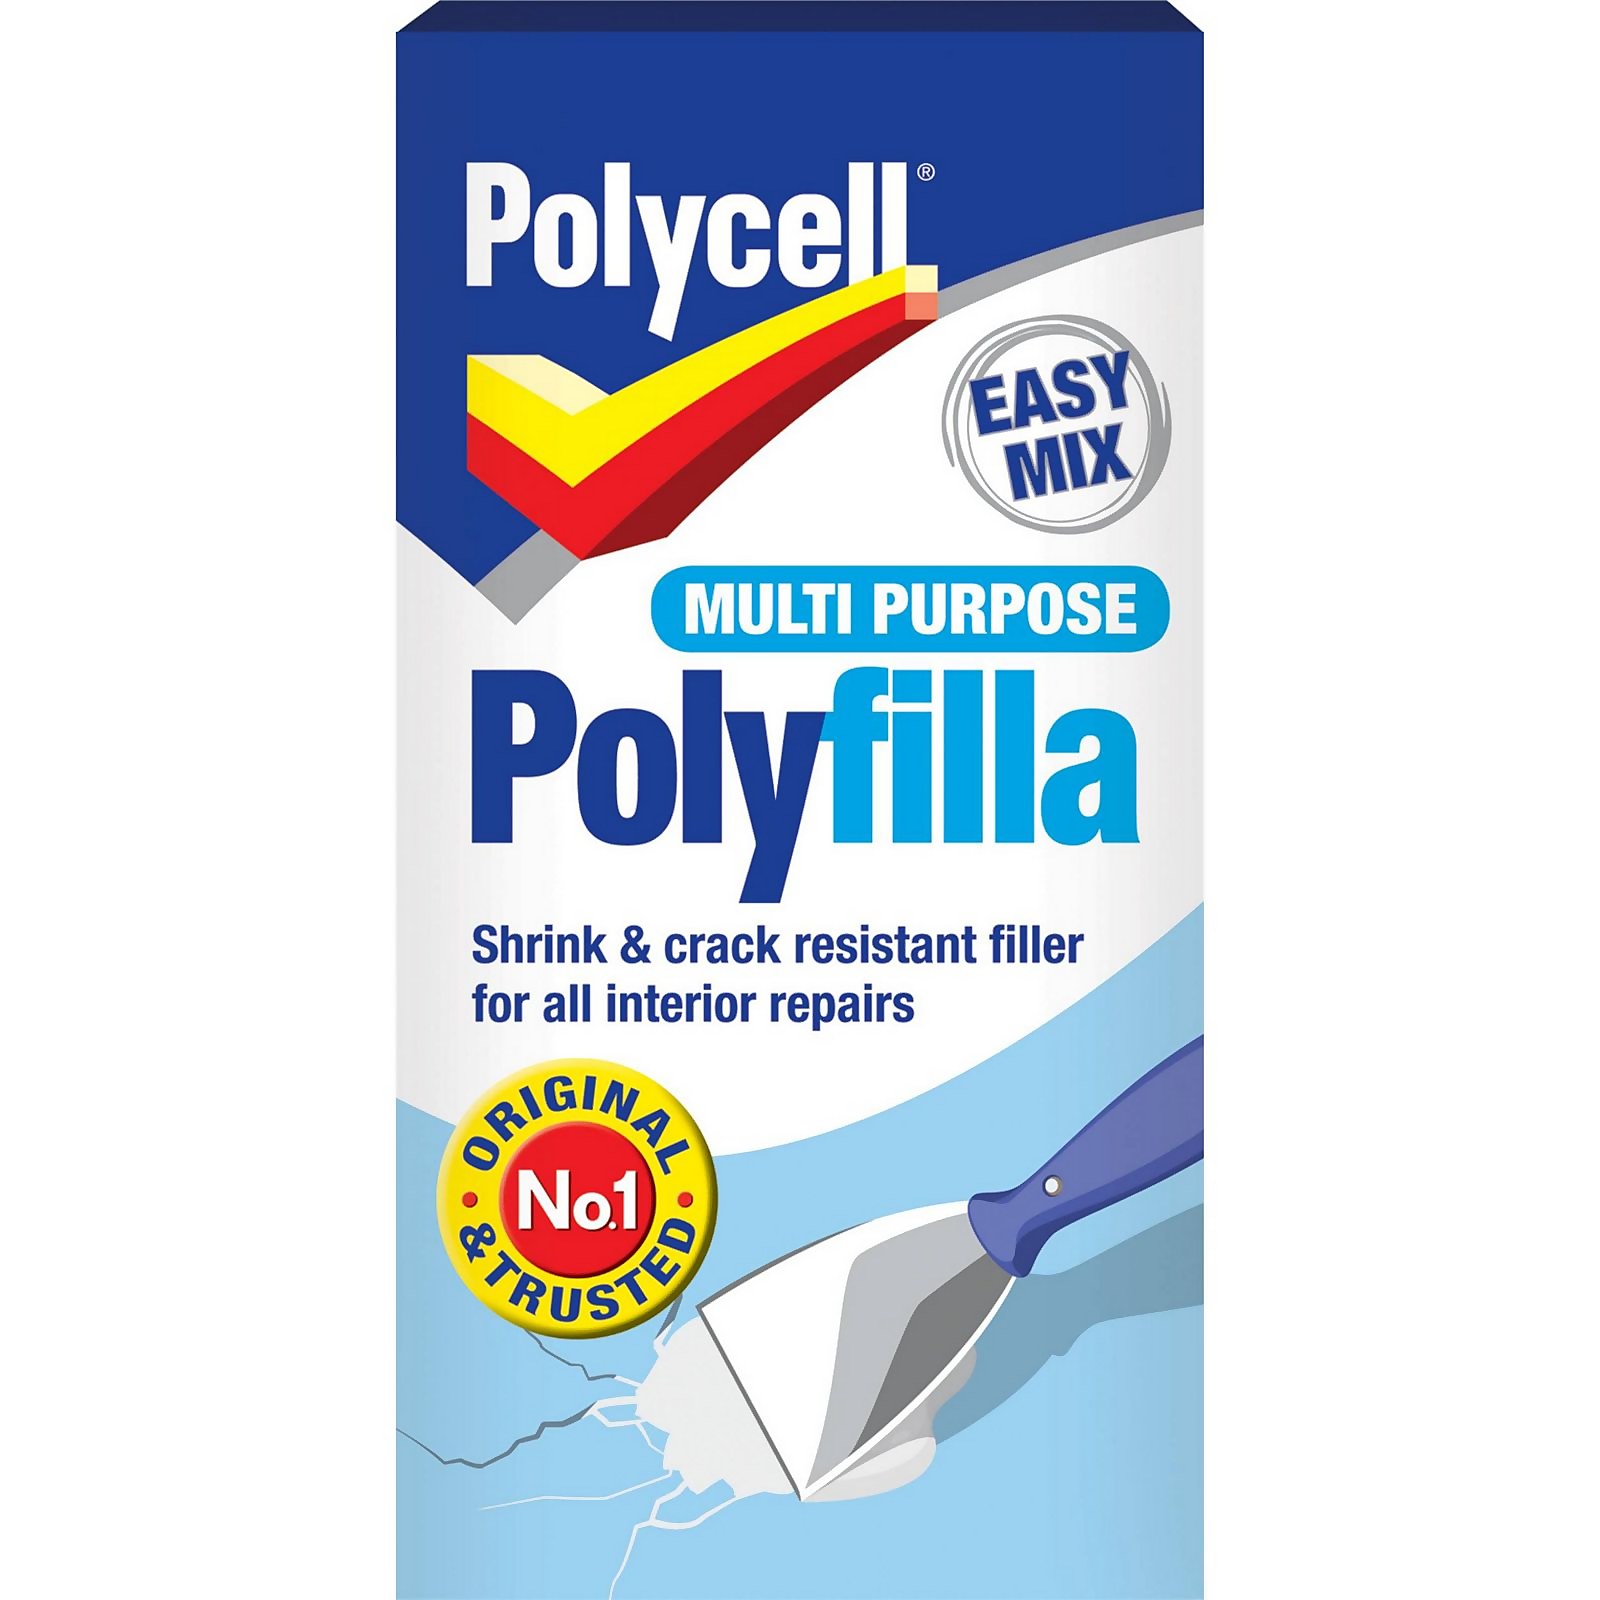 Photo of Polycell Multipurpose Interior Polyfilla - 450g